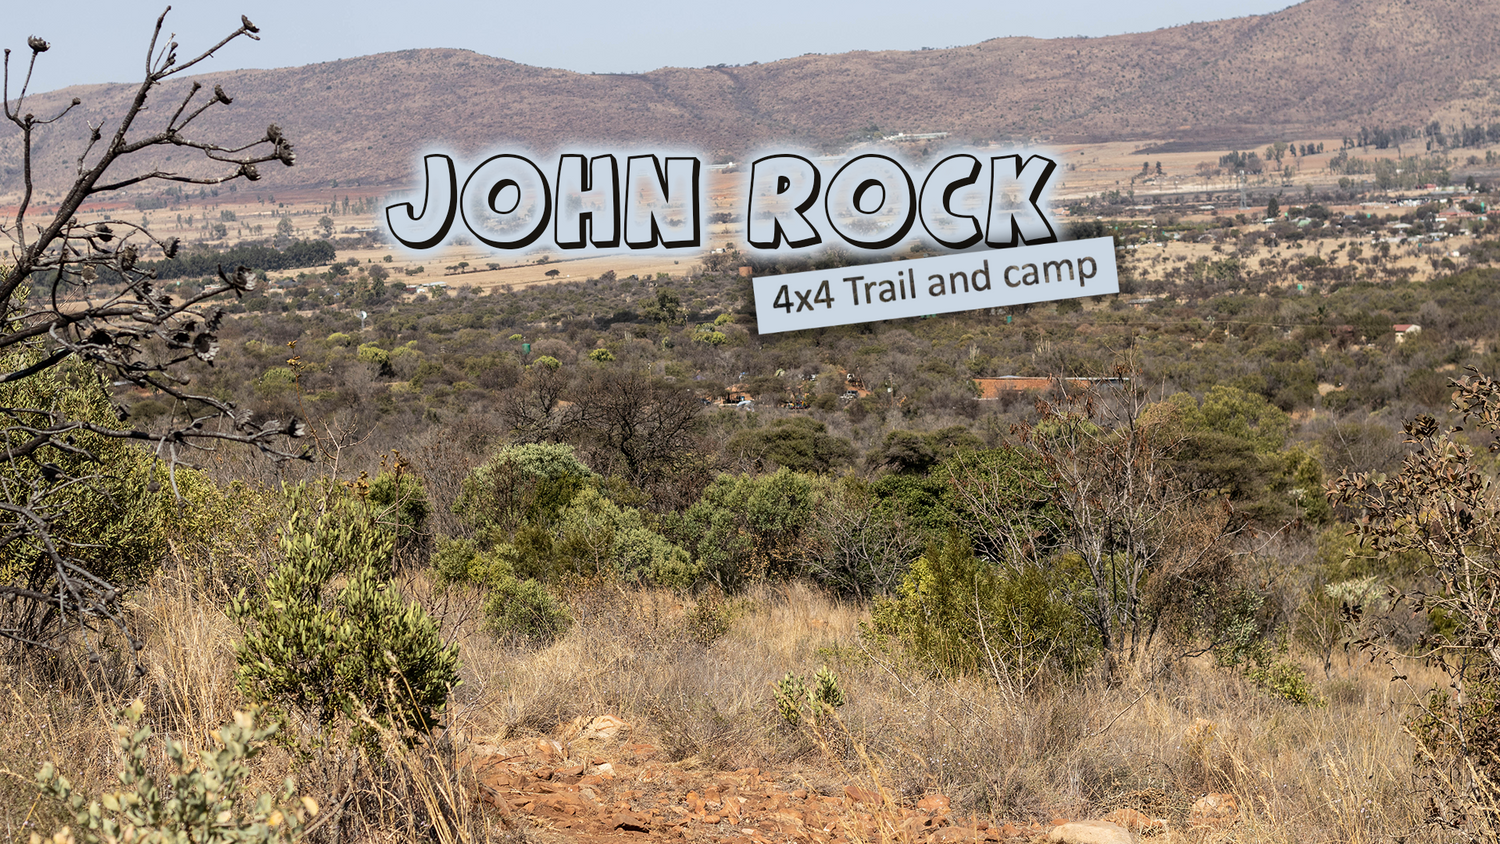 John Rock 4x4 Trail and Camp